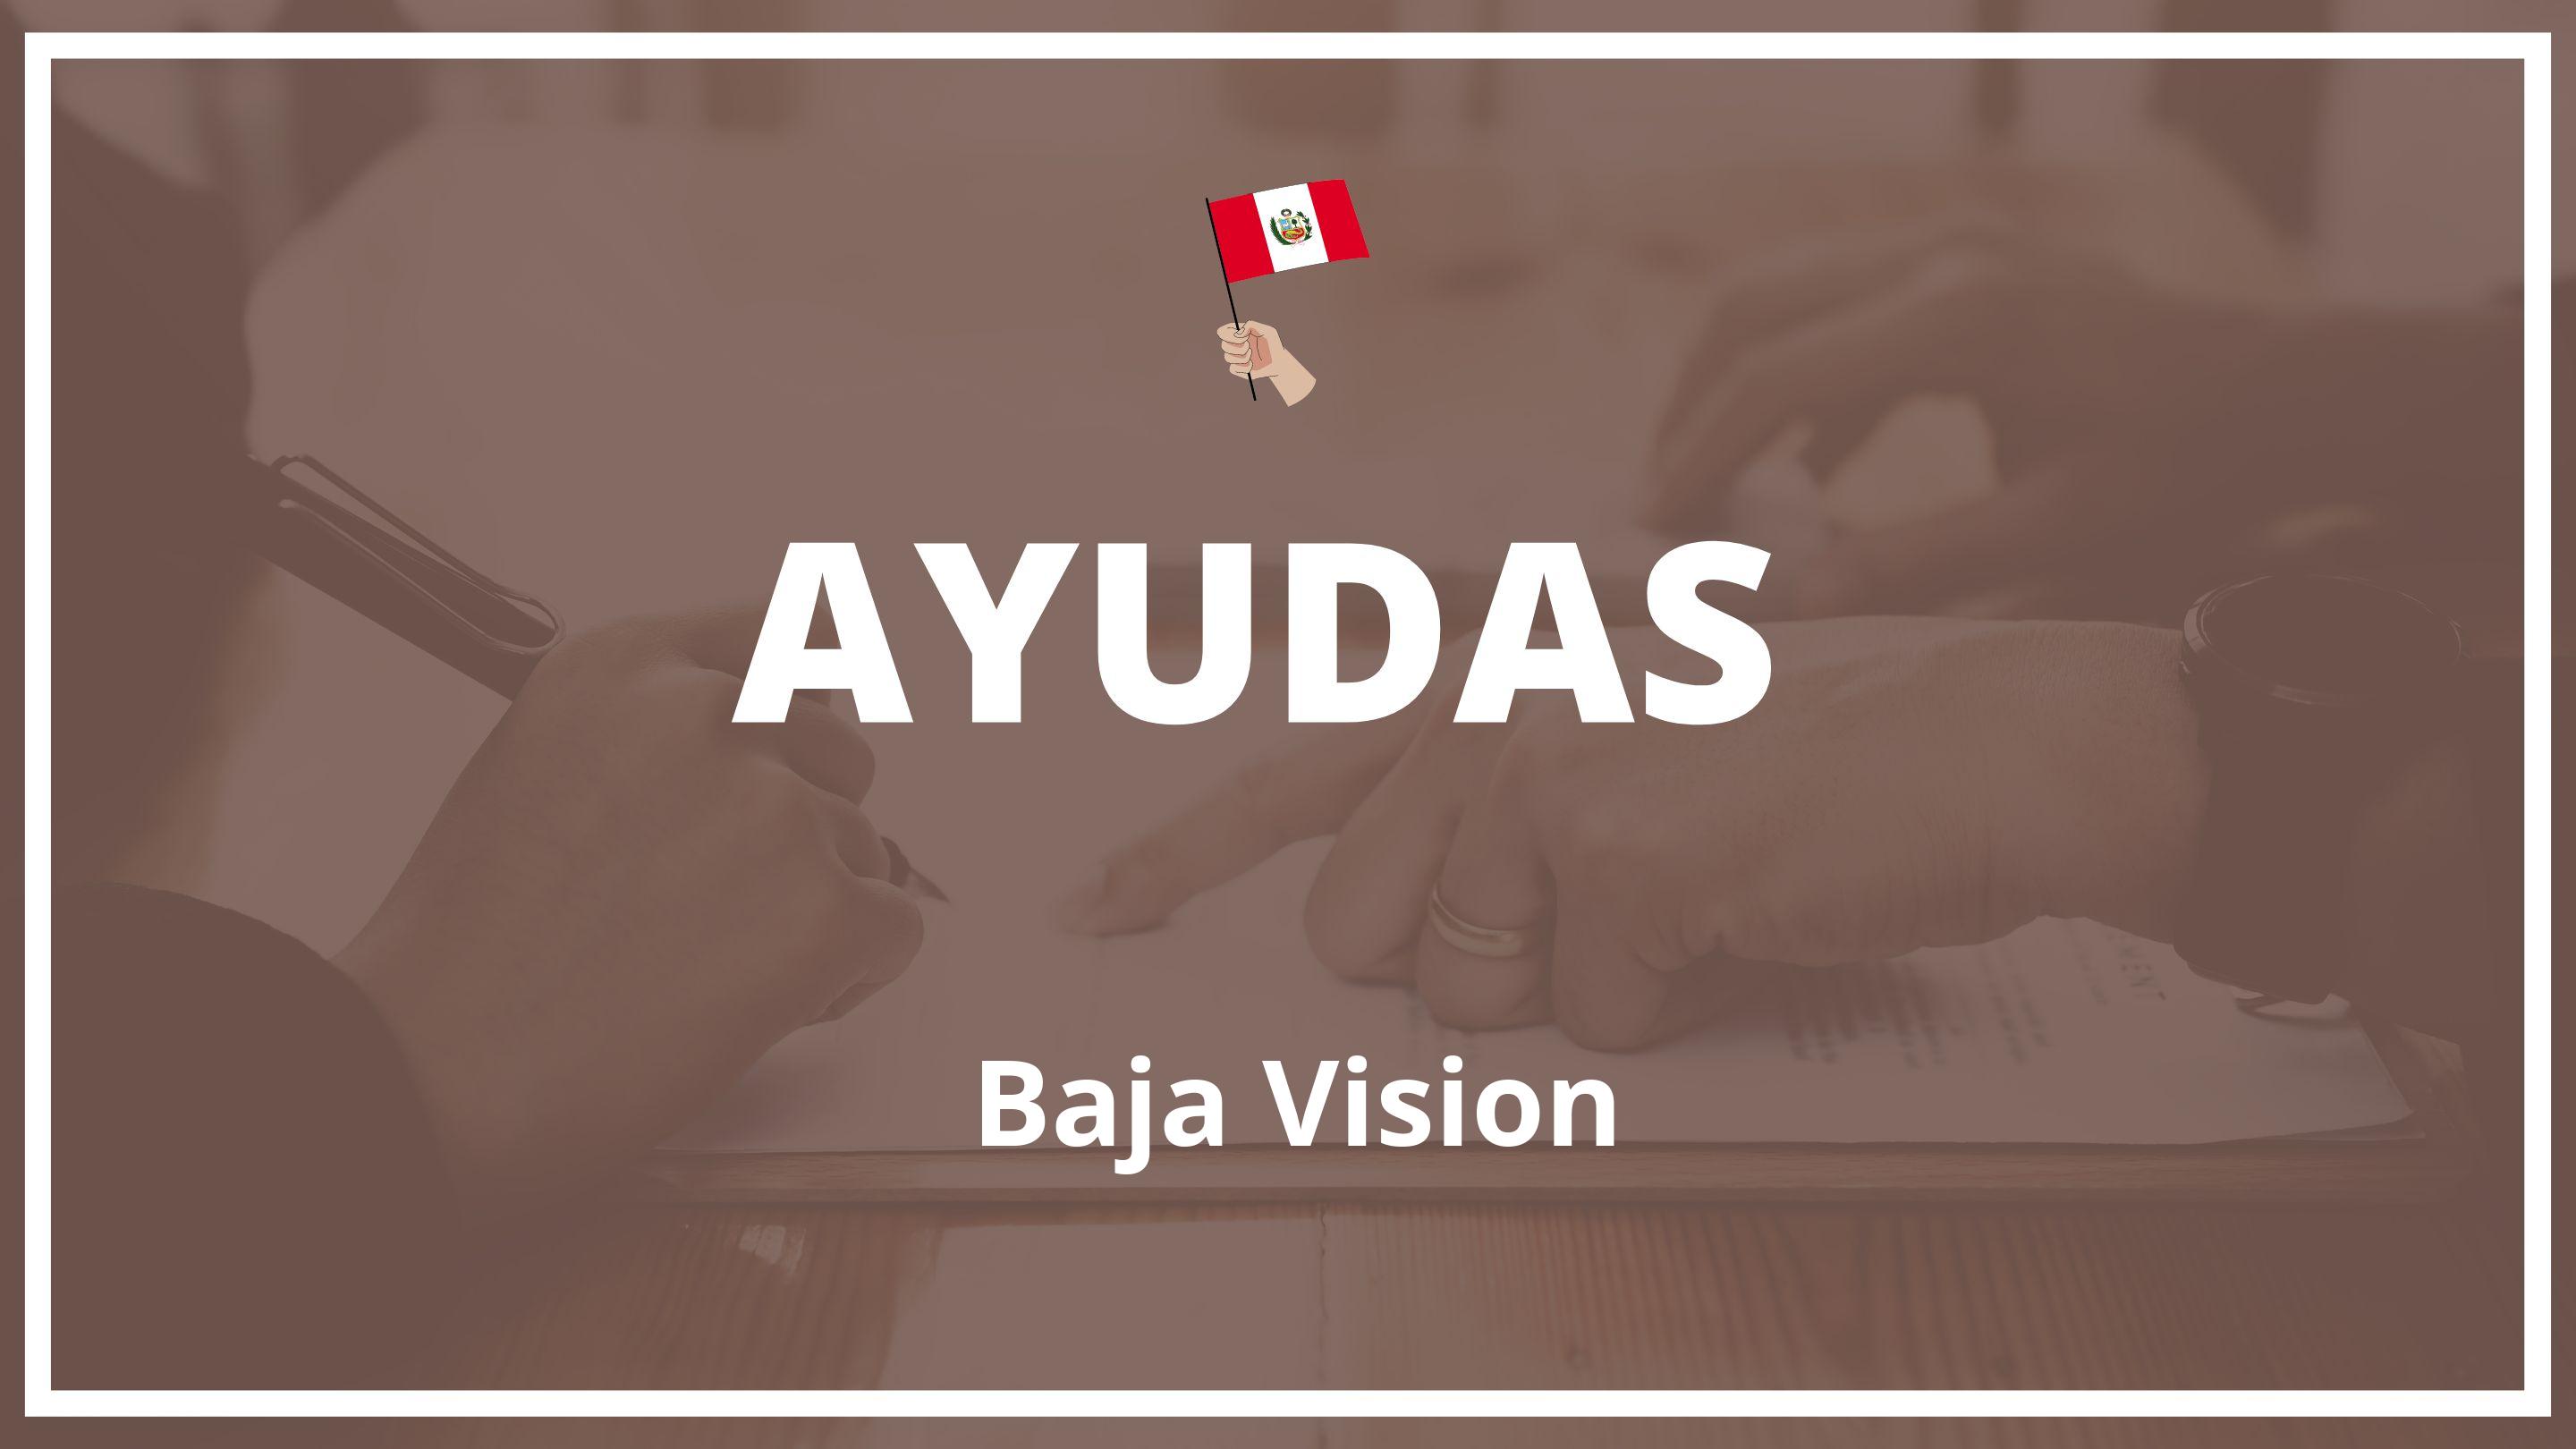 Ayudas para baja vision Peru